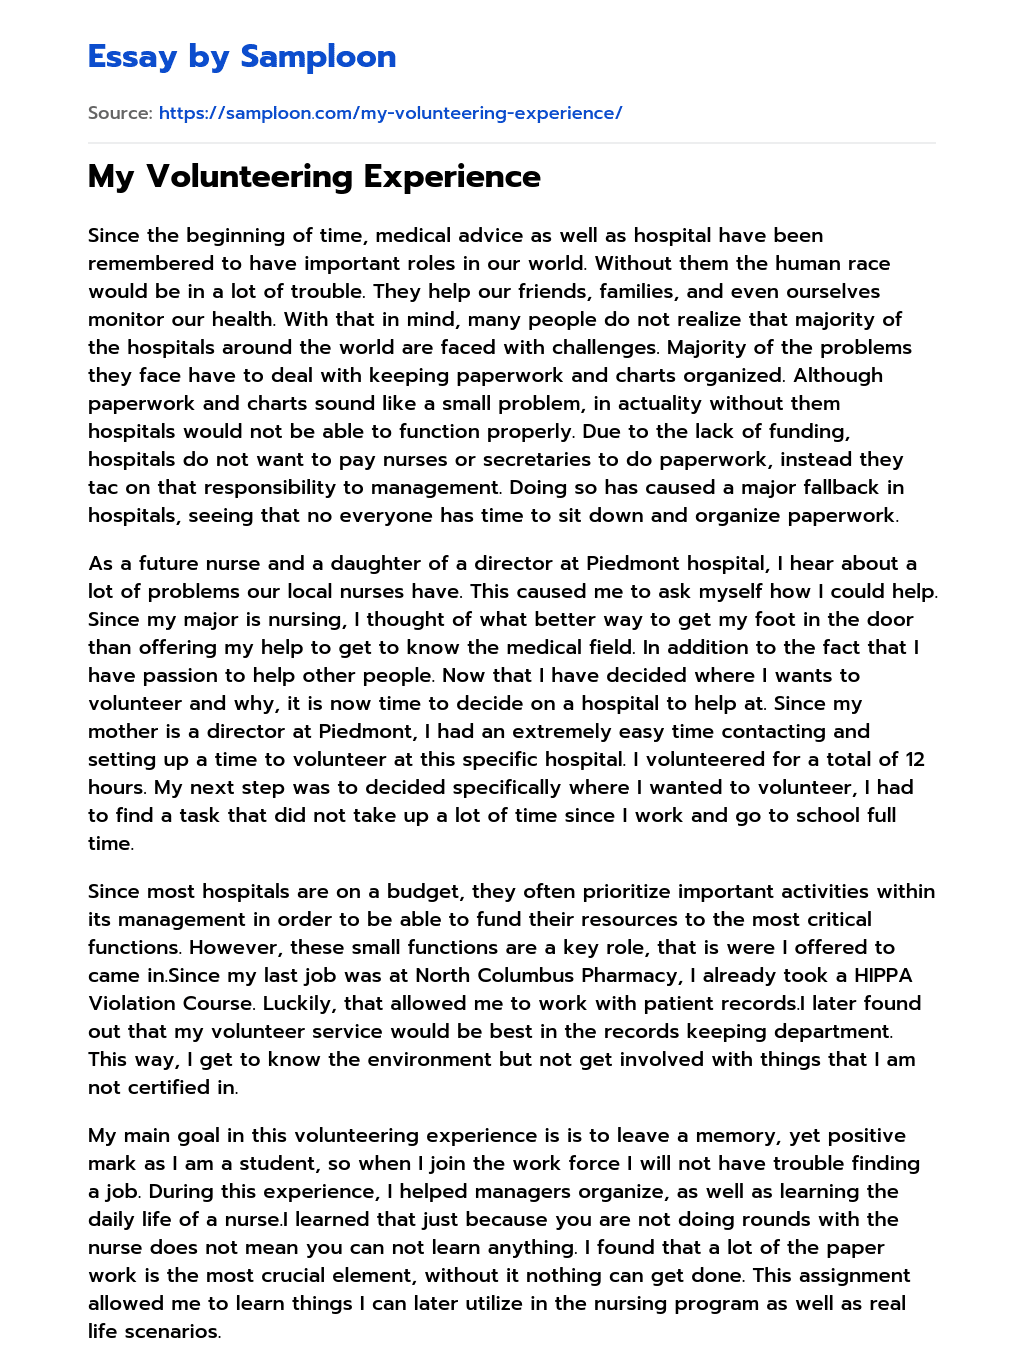 My Volunteering Experience essay